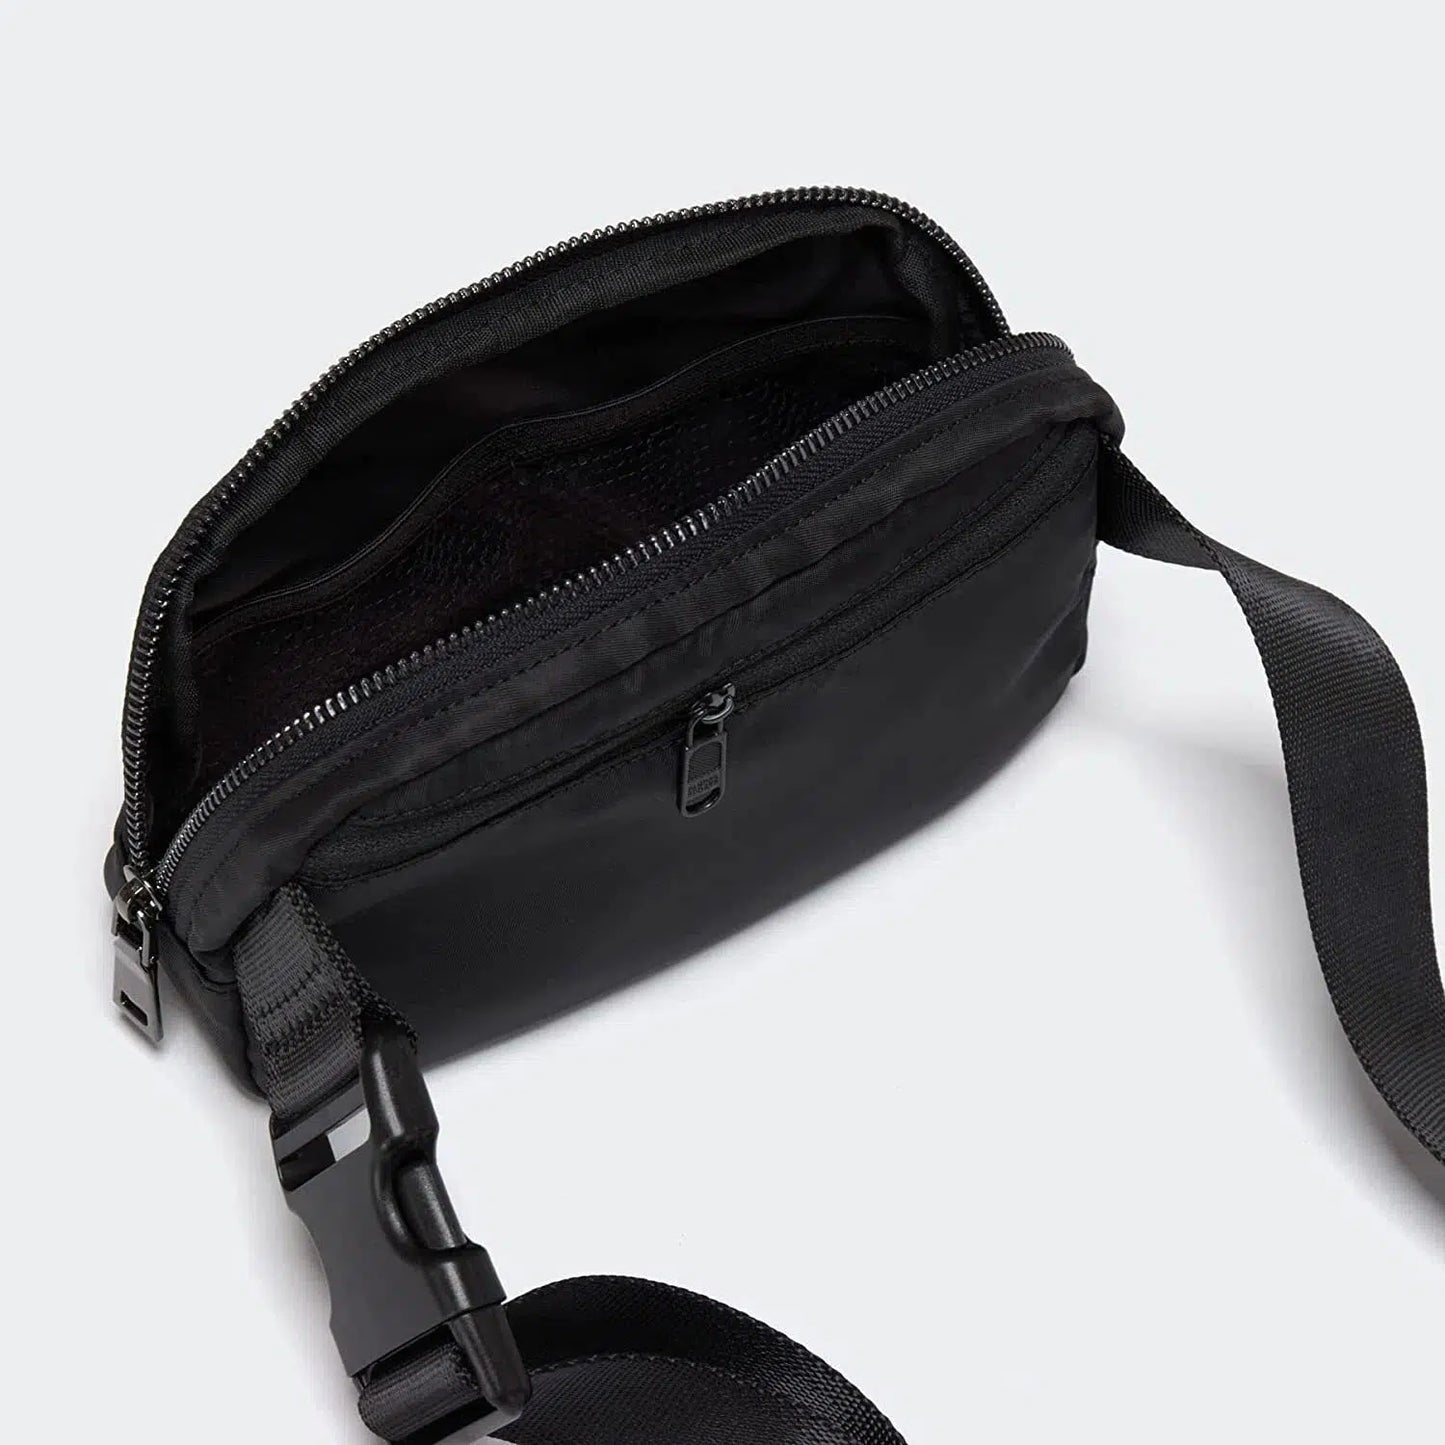 Hap Tim Belt Bag, Polyester Fanny Pack Bum Bag Crossbody Bags for Women Men (Black)